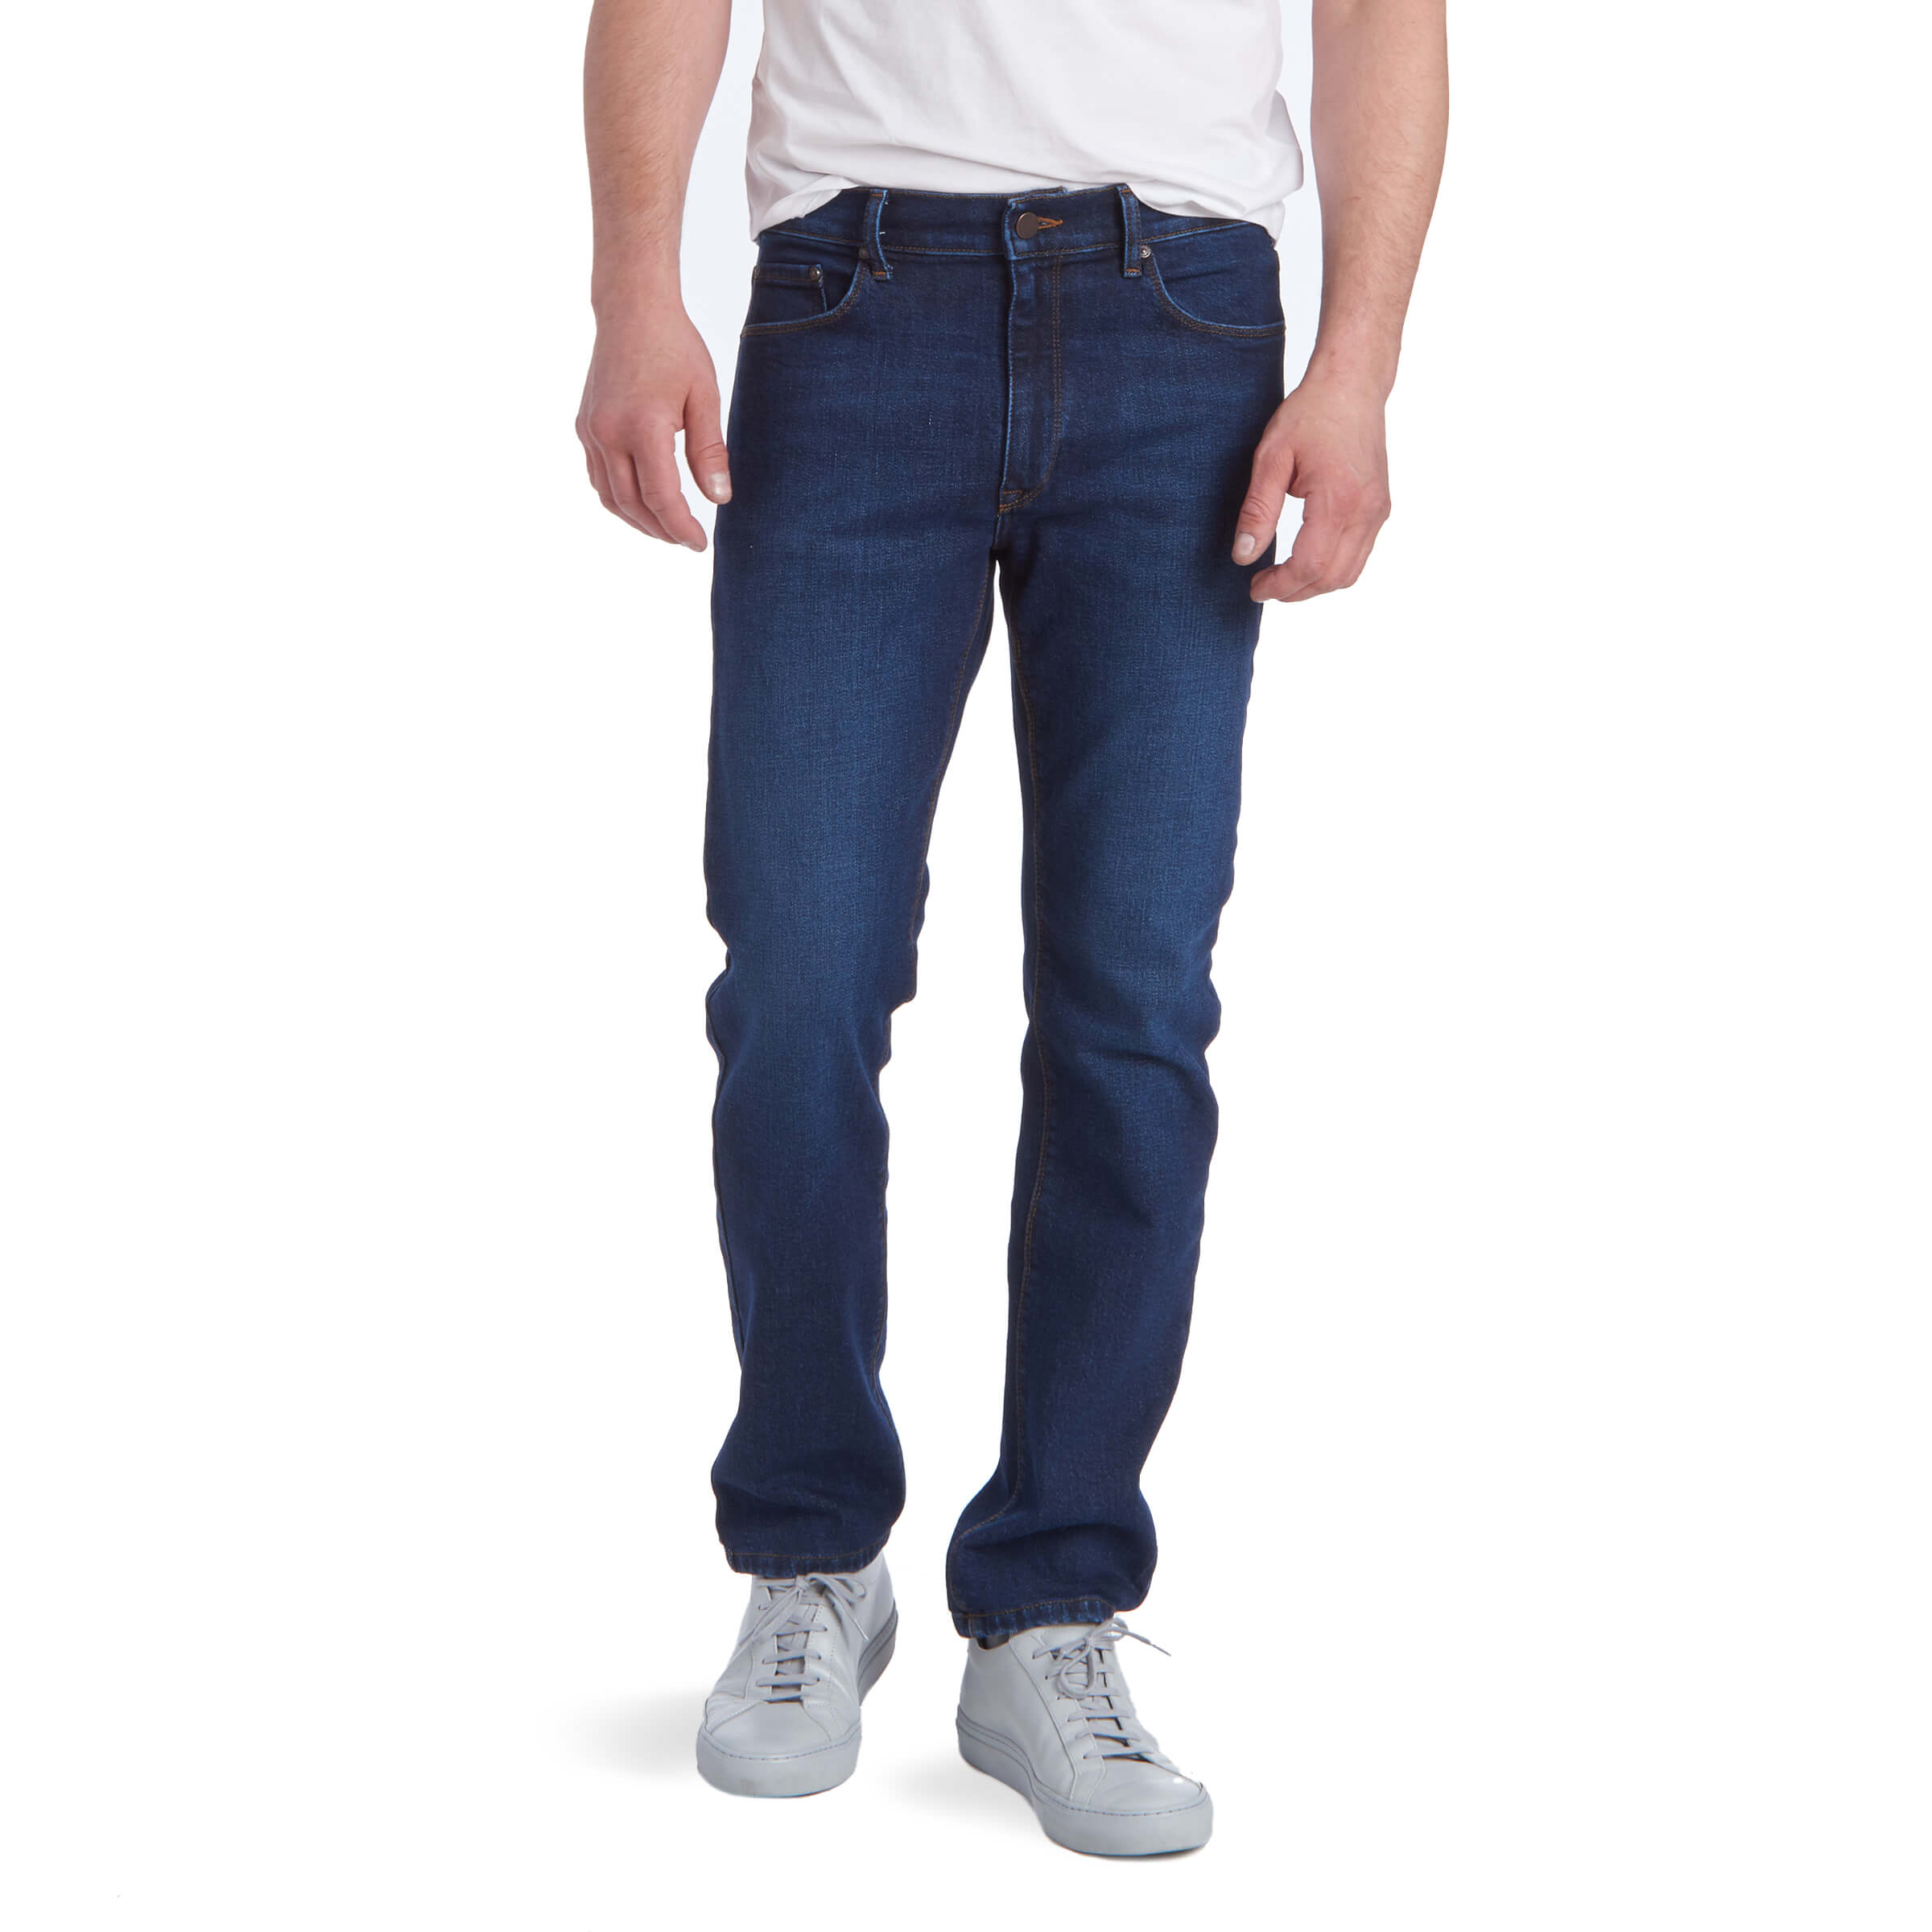 Men wearing Medium/Dark Blue Slim Grand Jeans